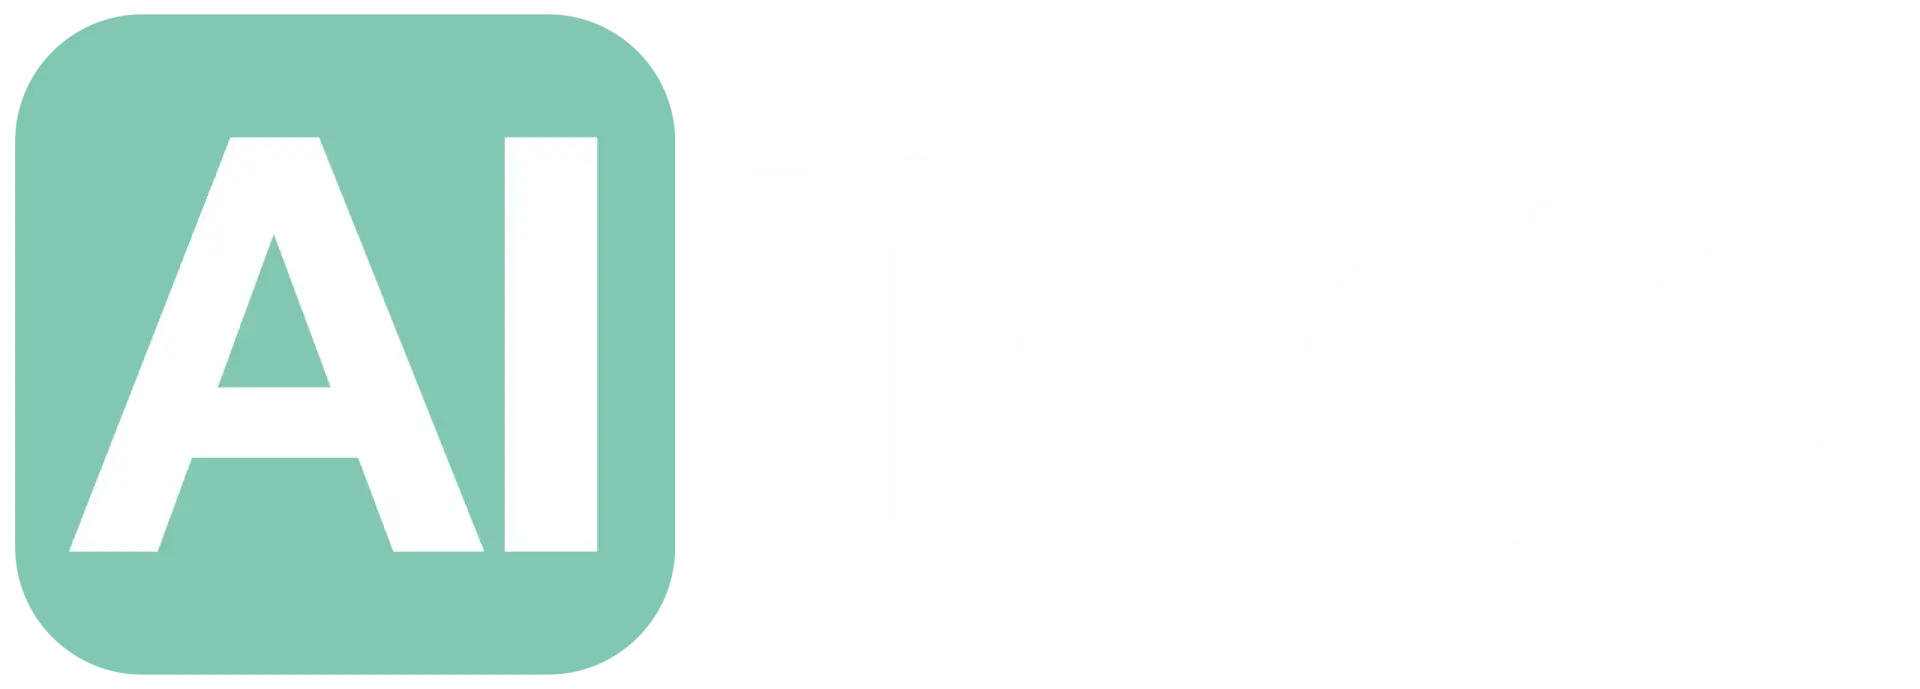 Ailingo logo white